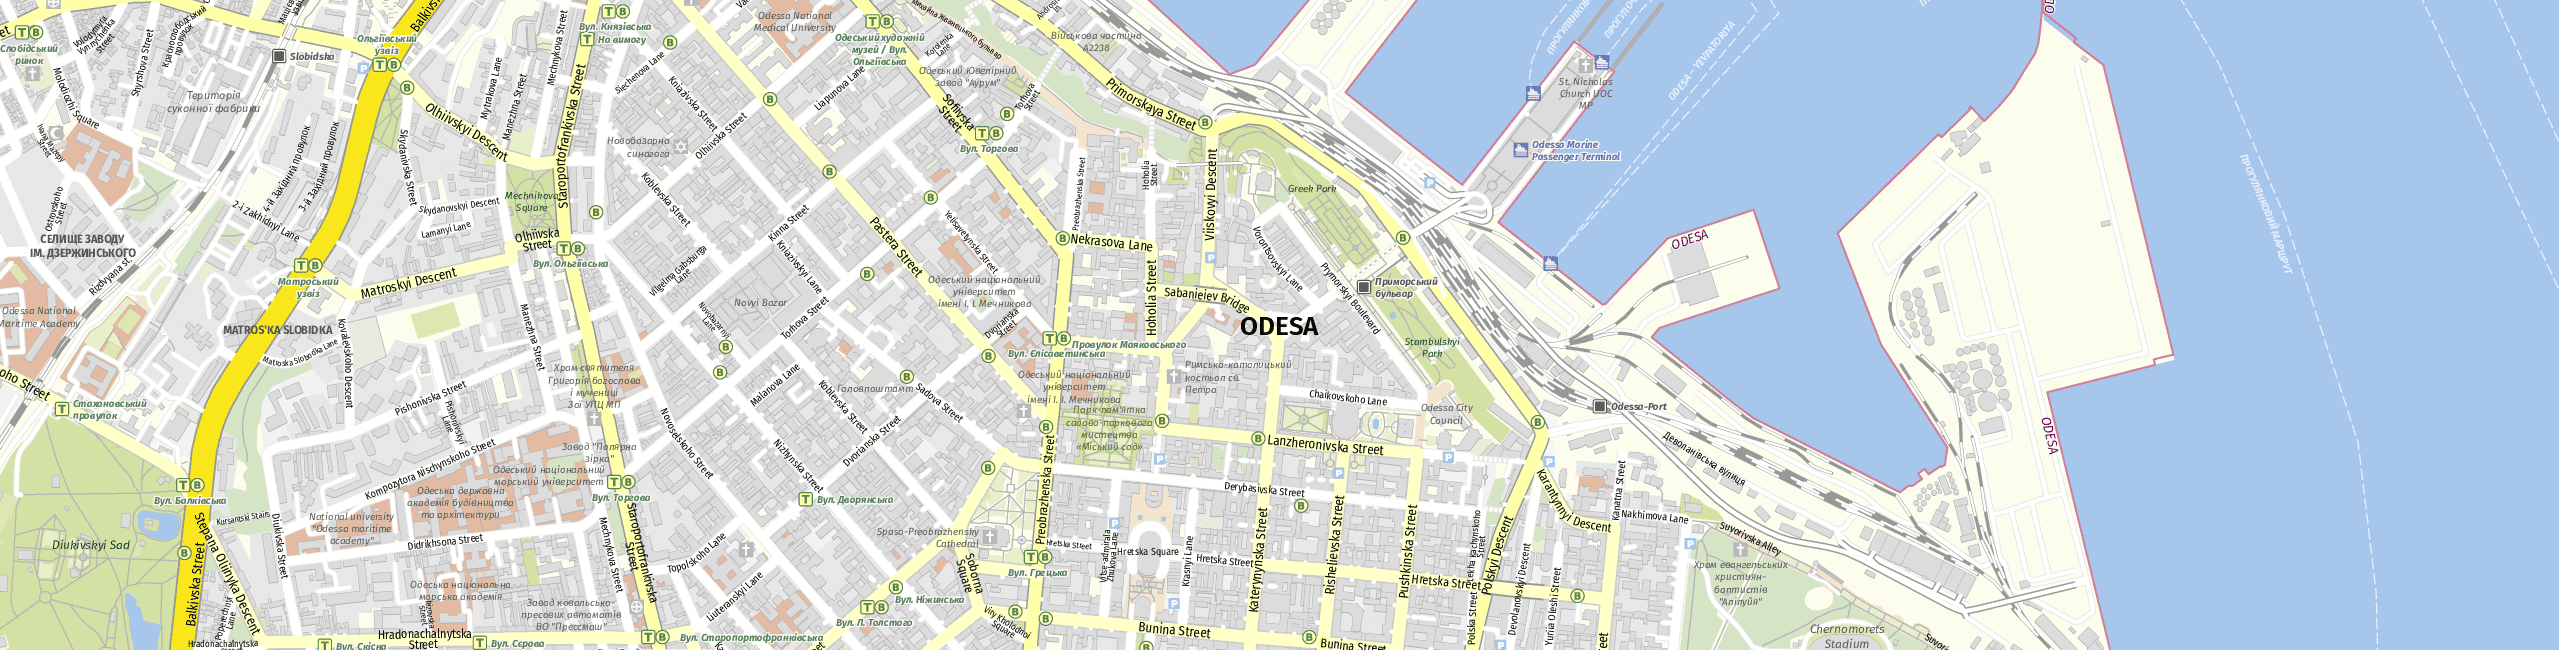 Stadtplan Odessa zum Downloaden.